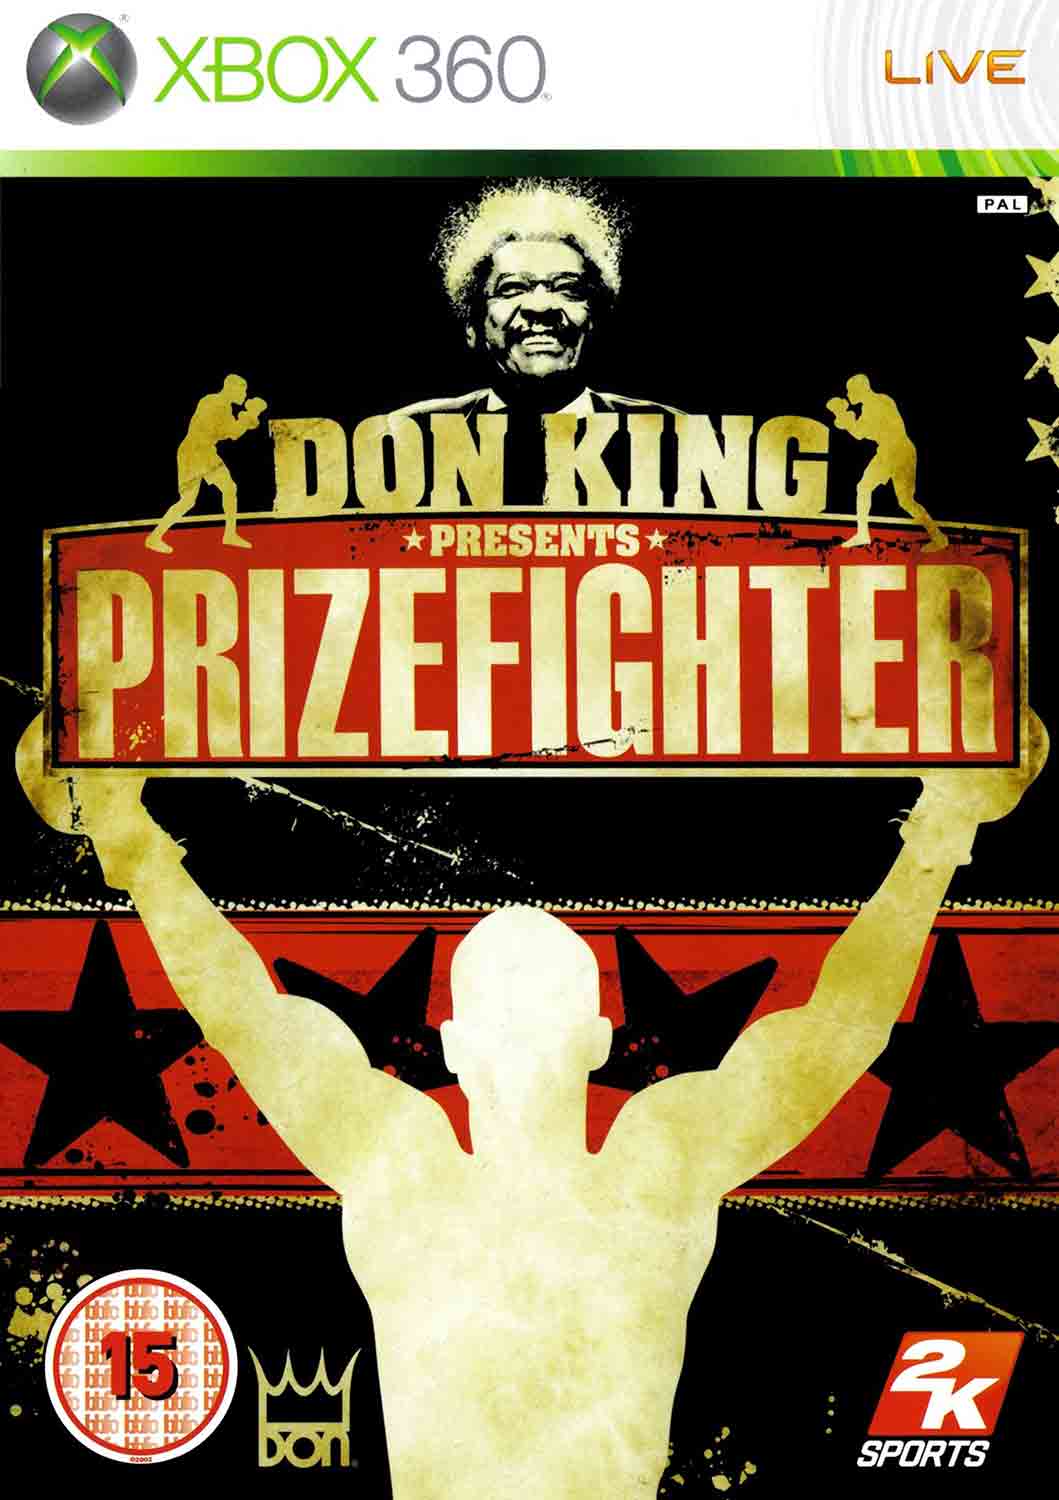 Hra Don King Presents Prizefighter pro XBOX 360 X360 konzole